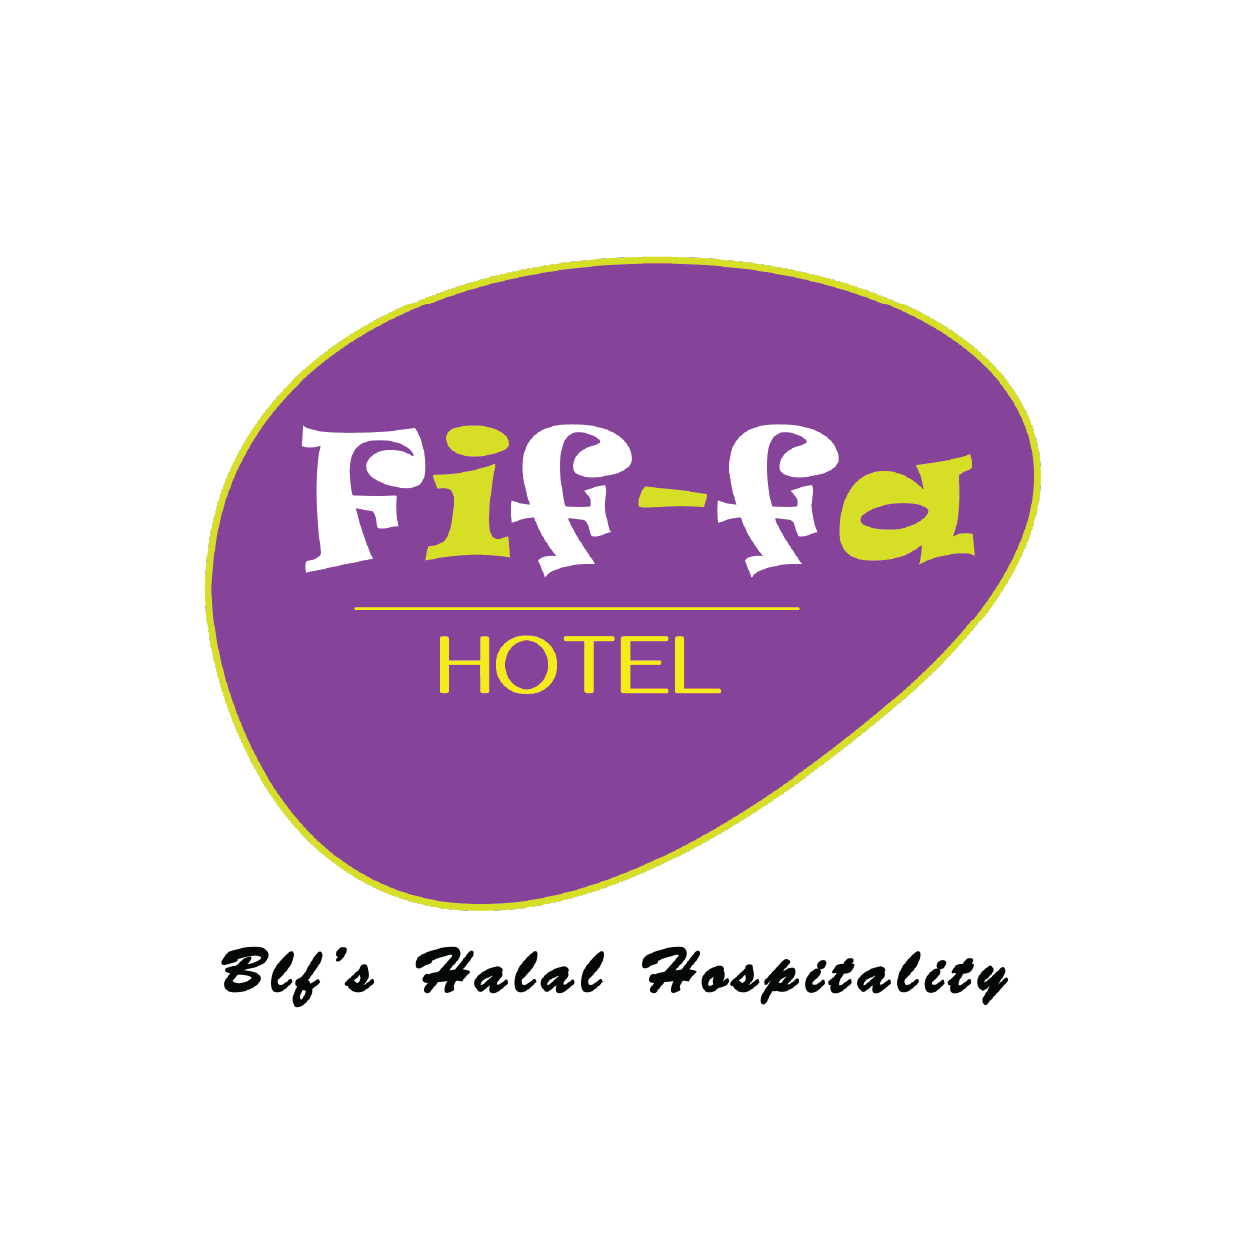 Fiffa logo